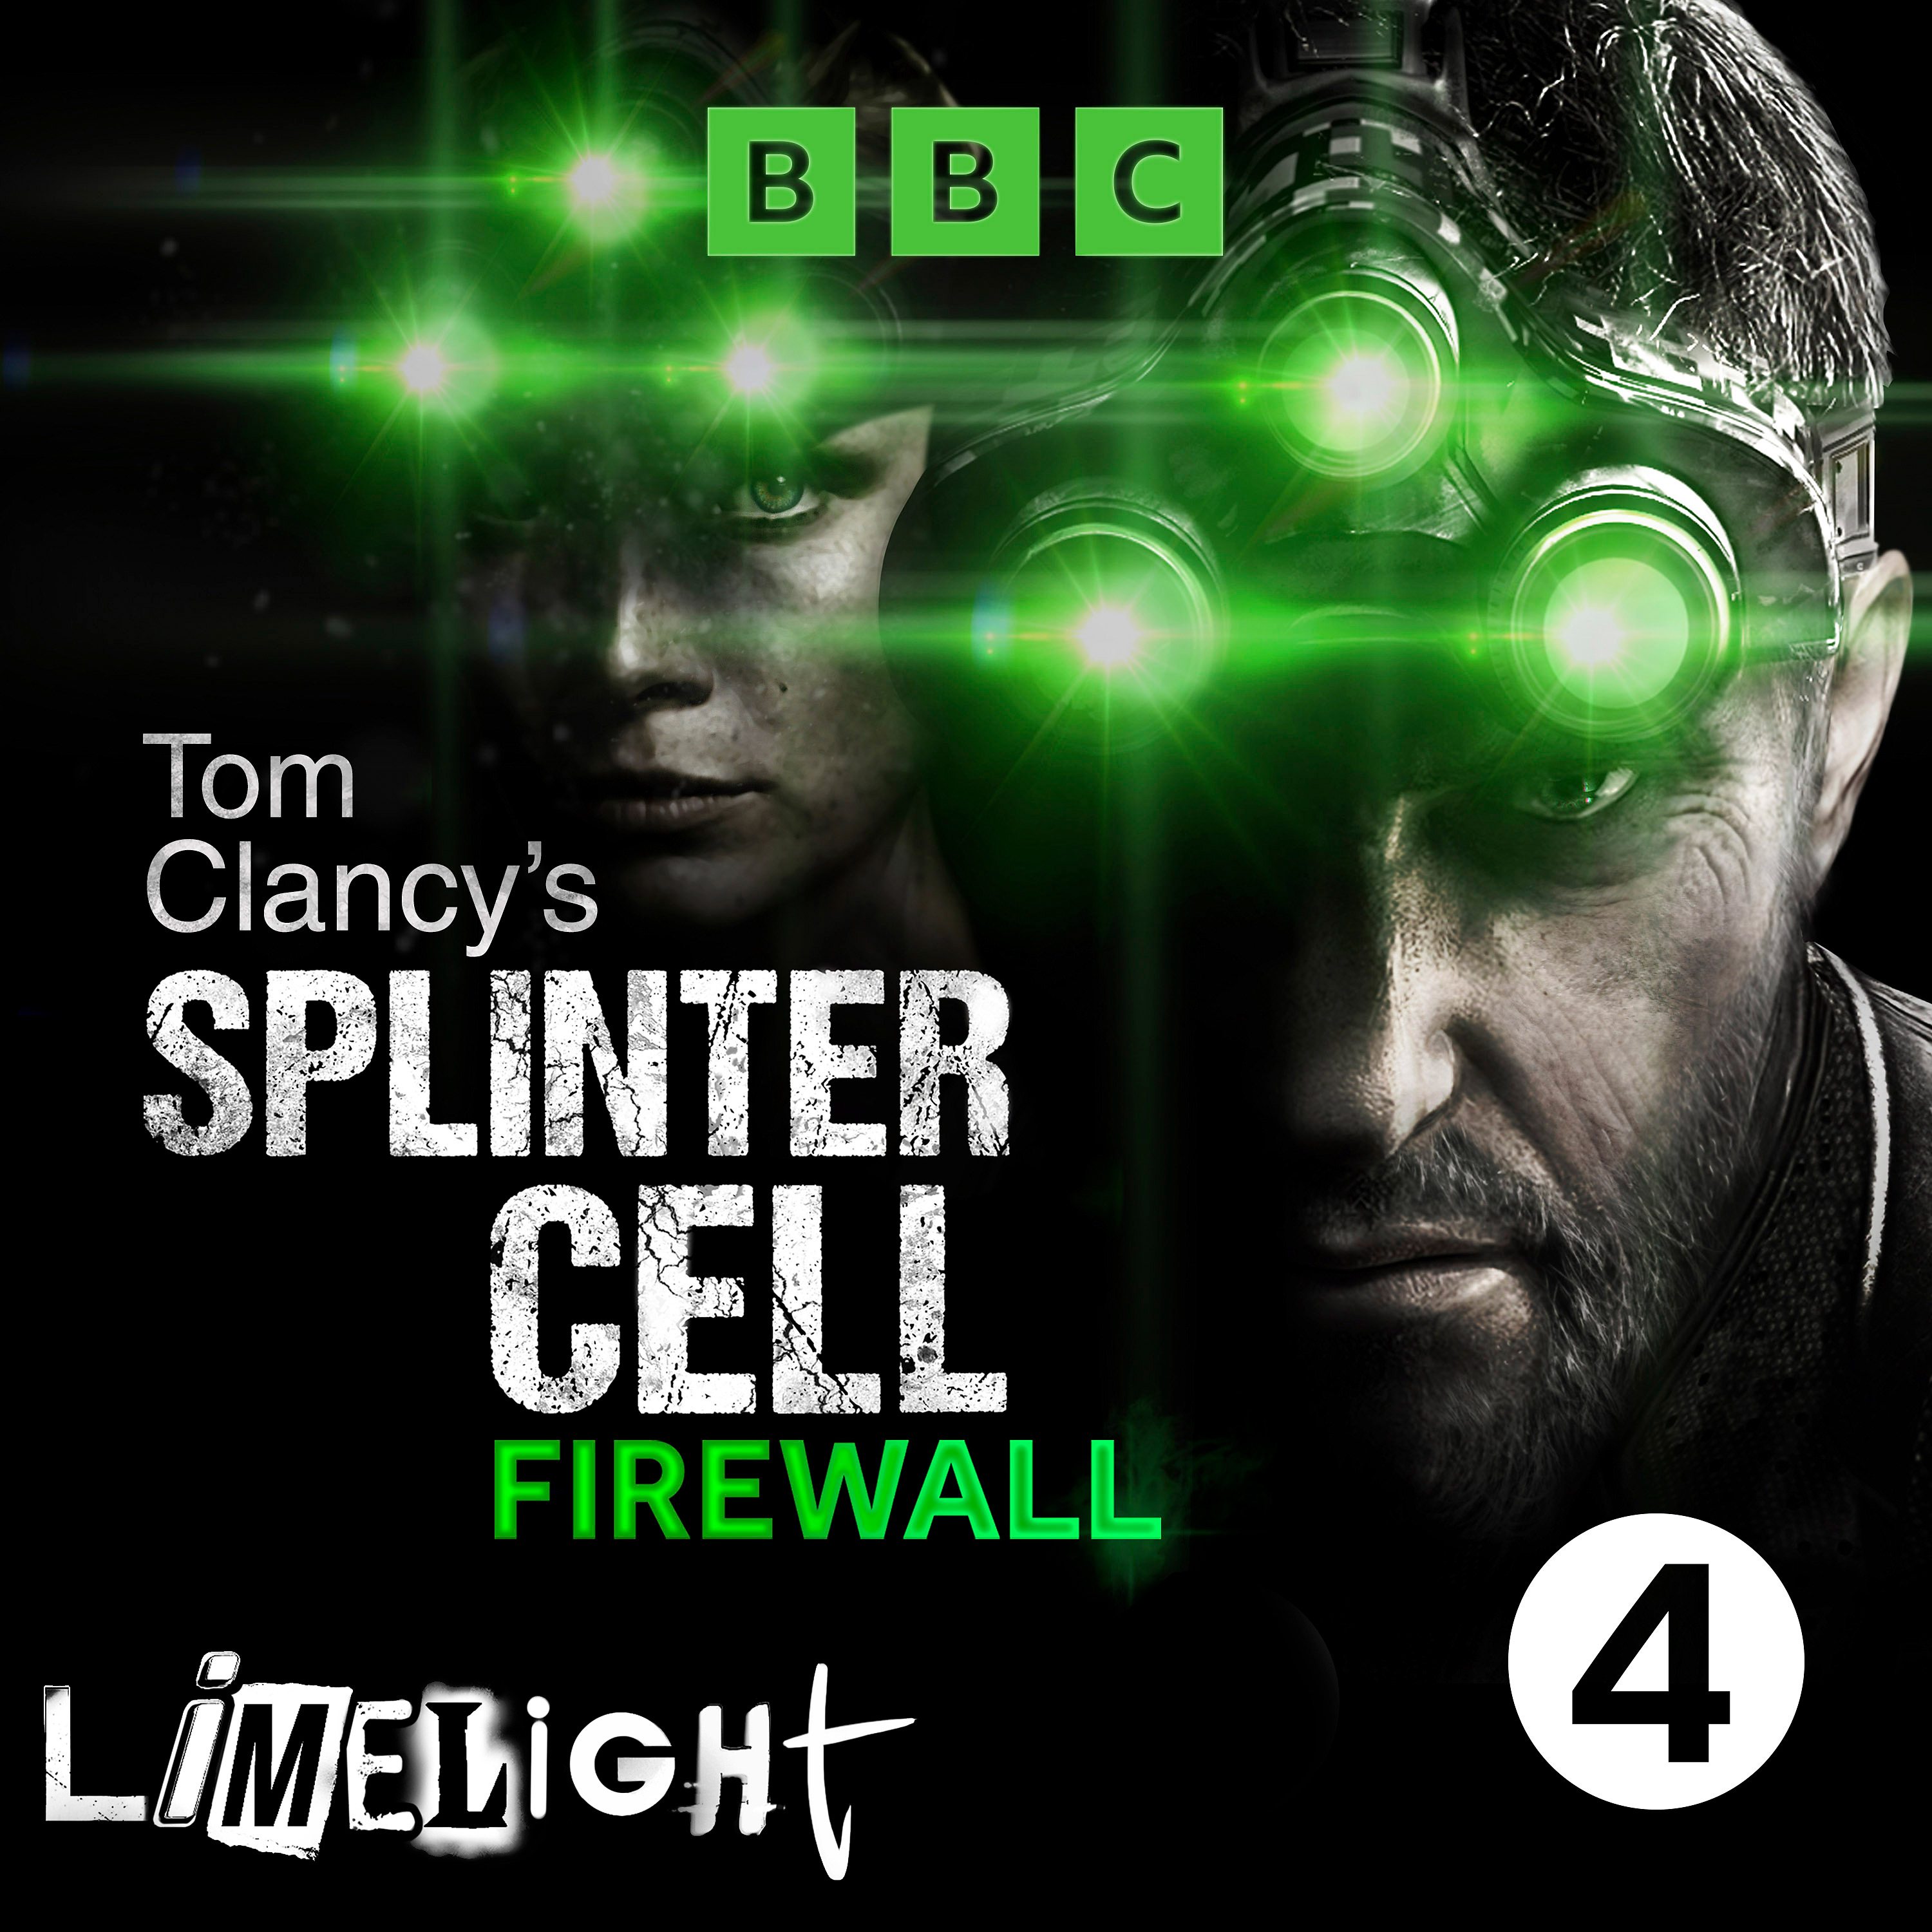 Introducing Tom Clancy’s Splinter Cell: Firewall